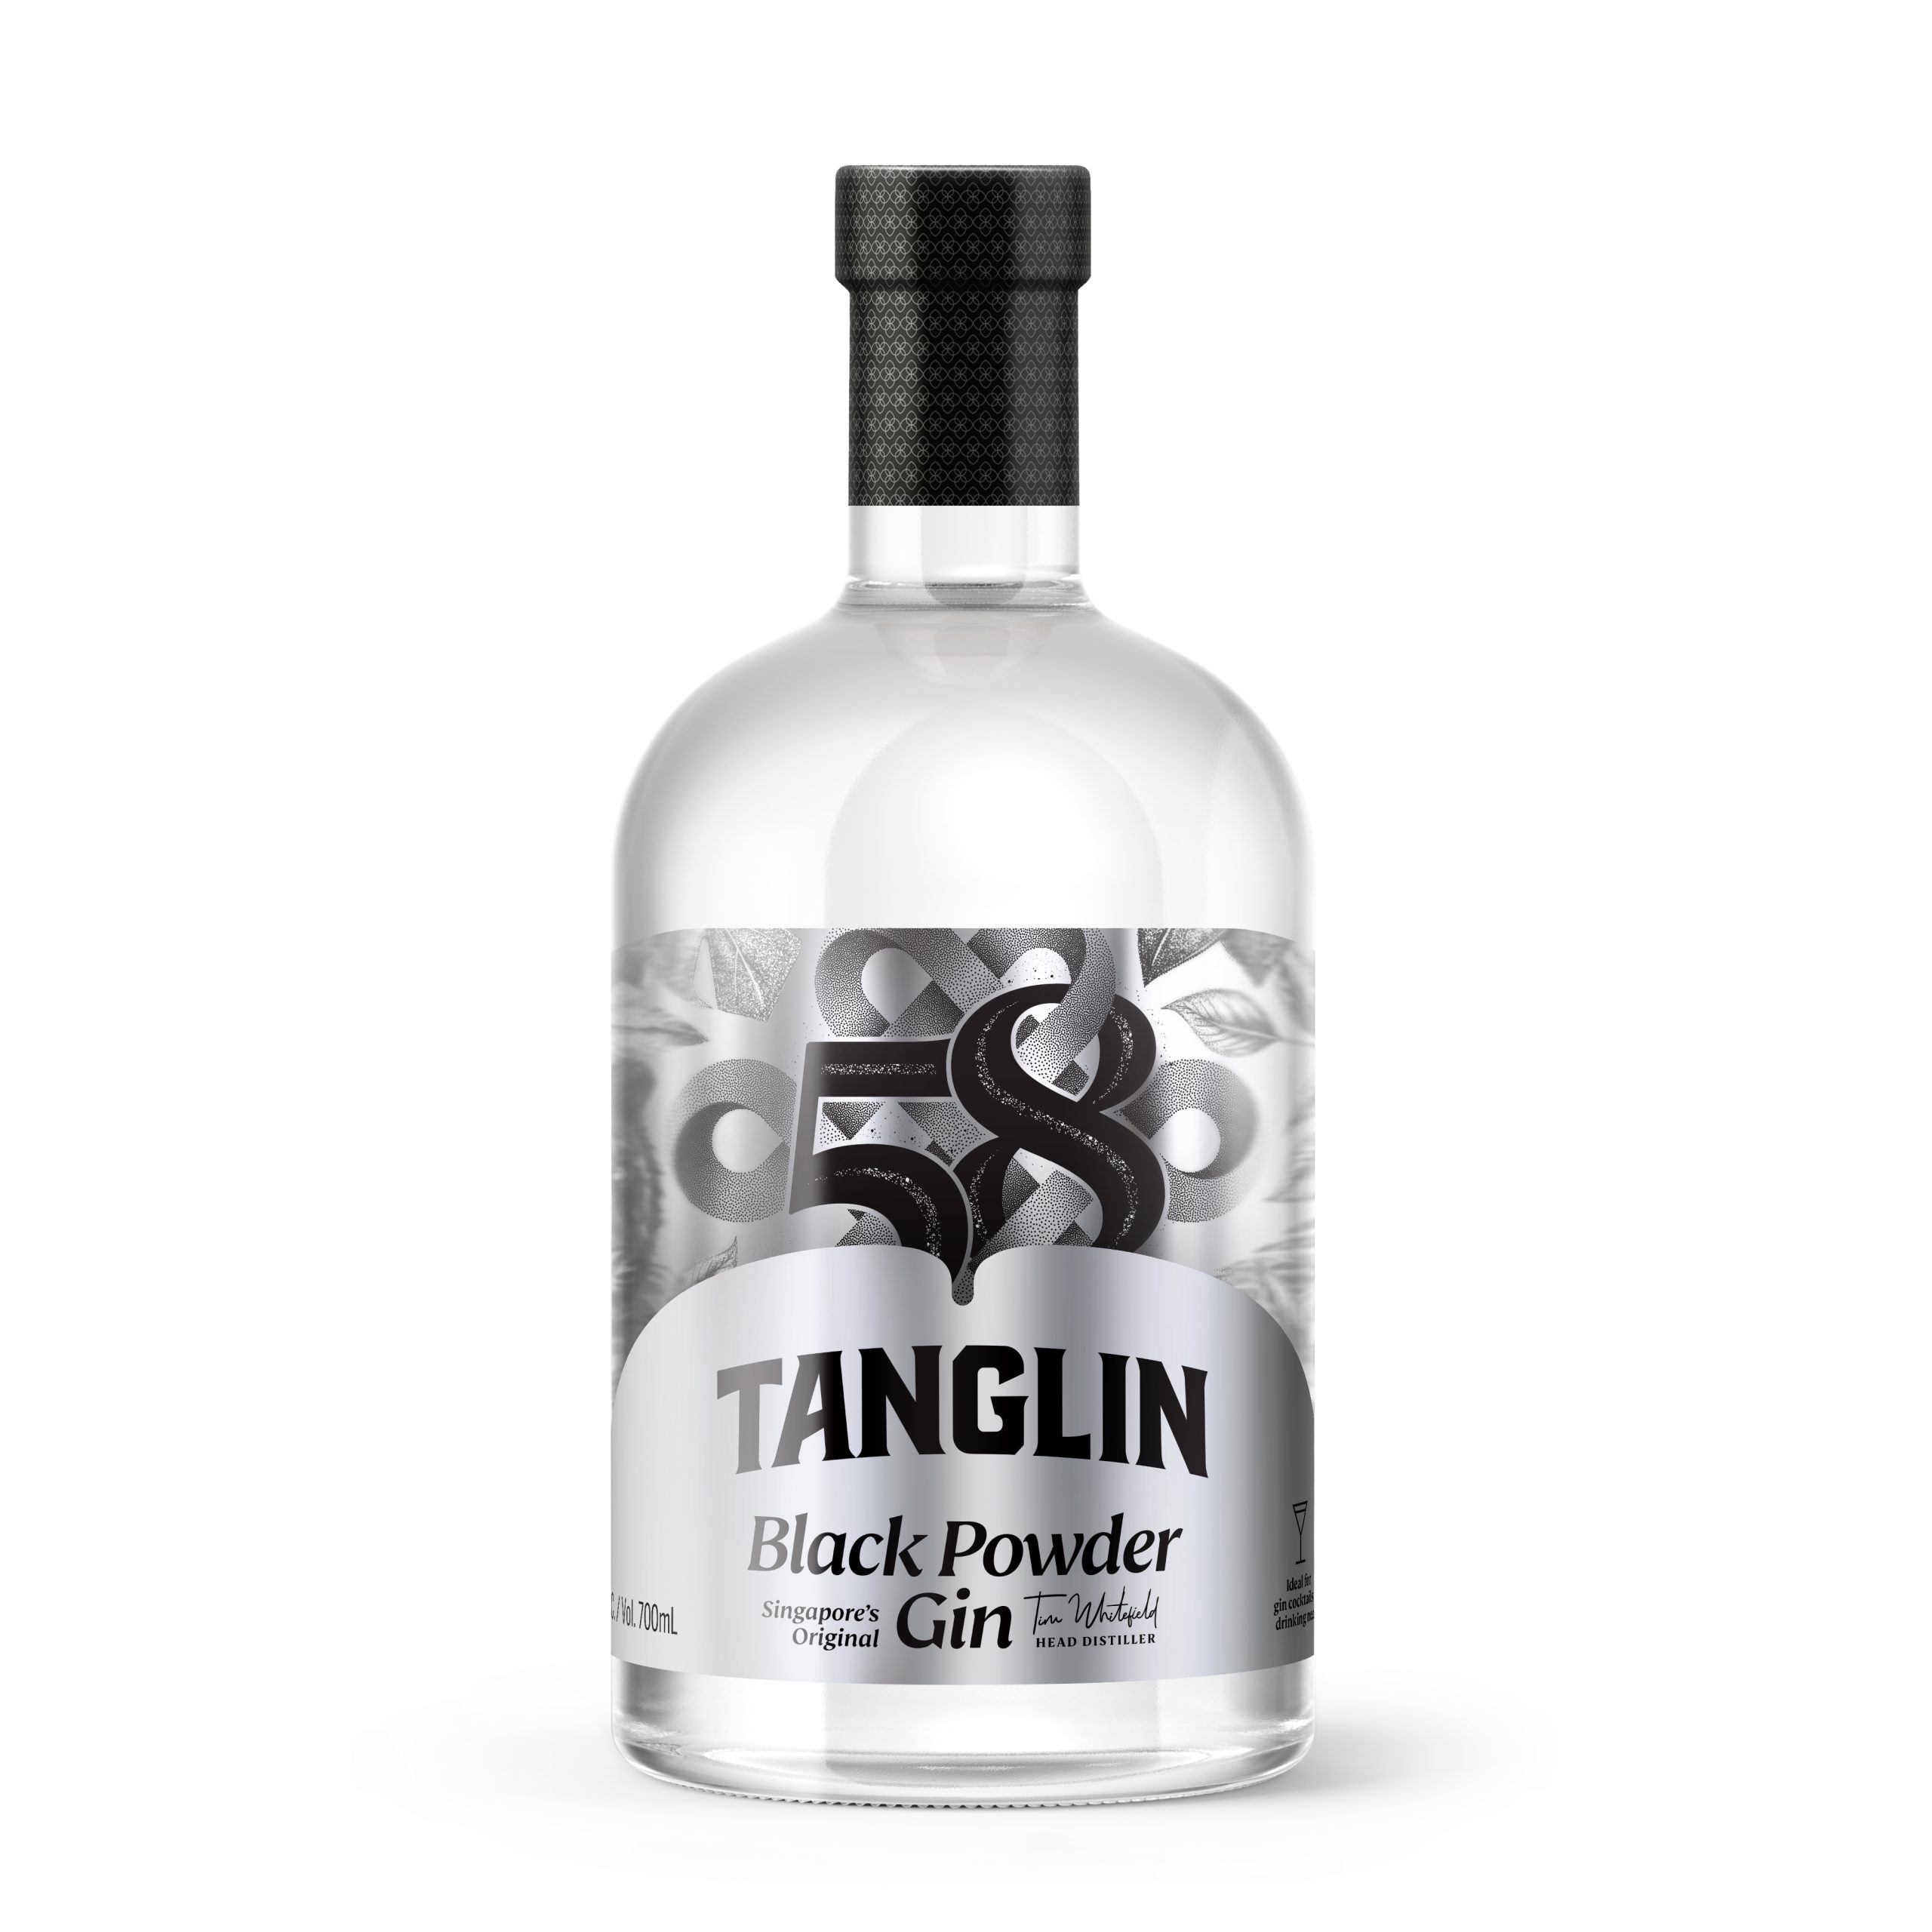 TANGLIN Black Powder Gin – Singapore